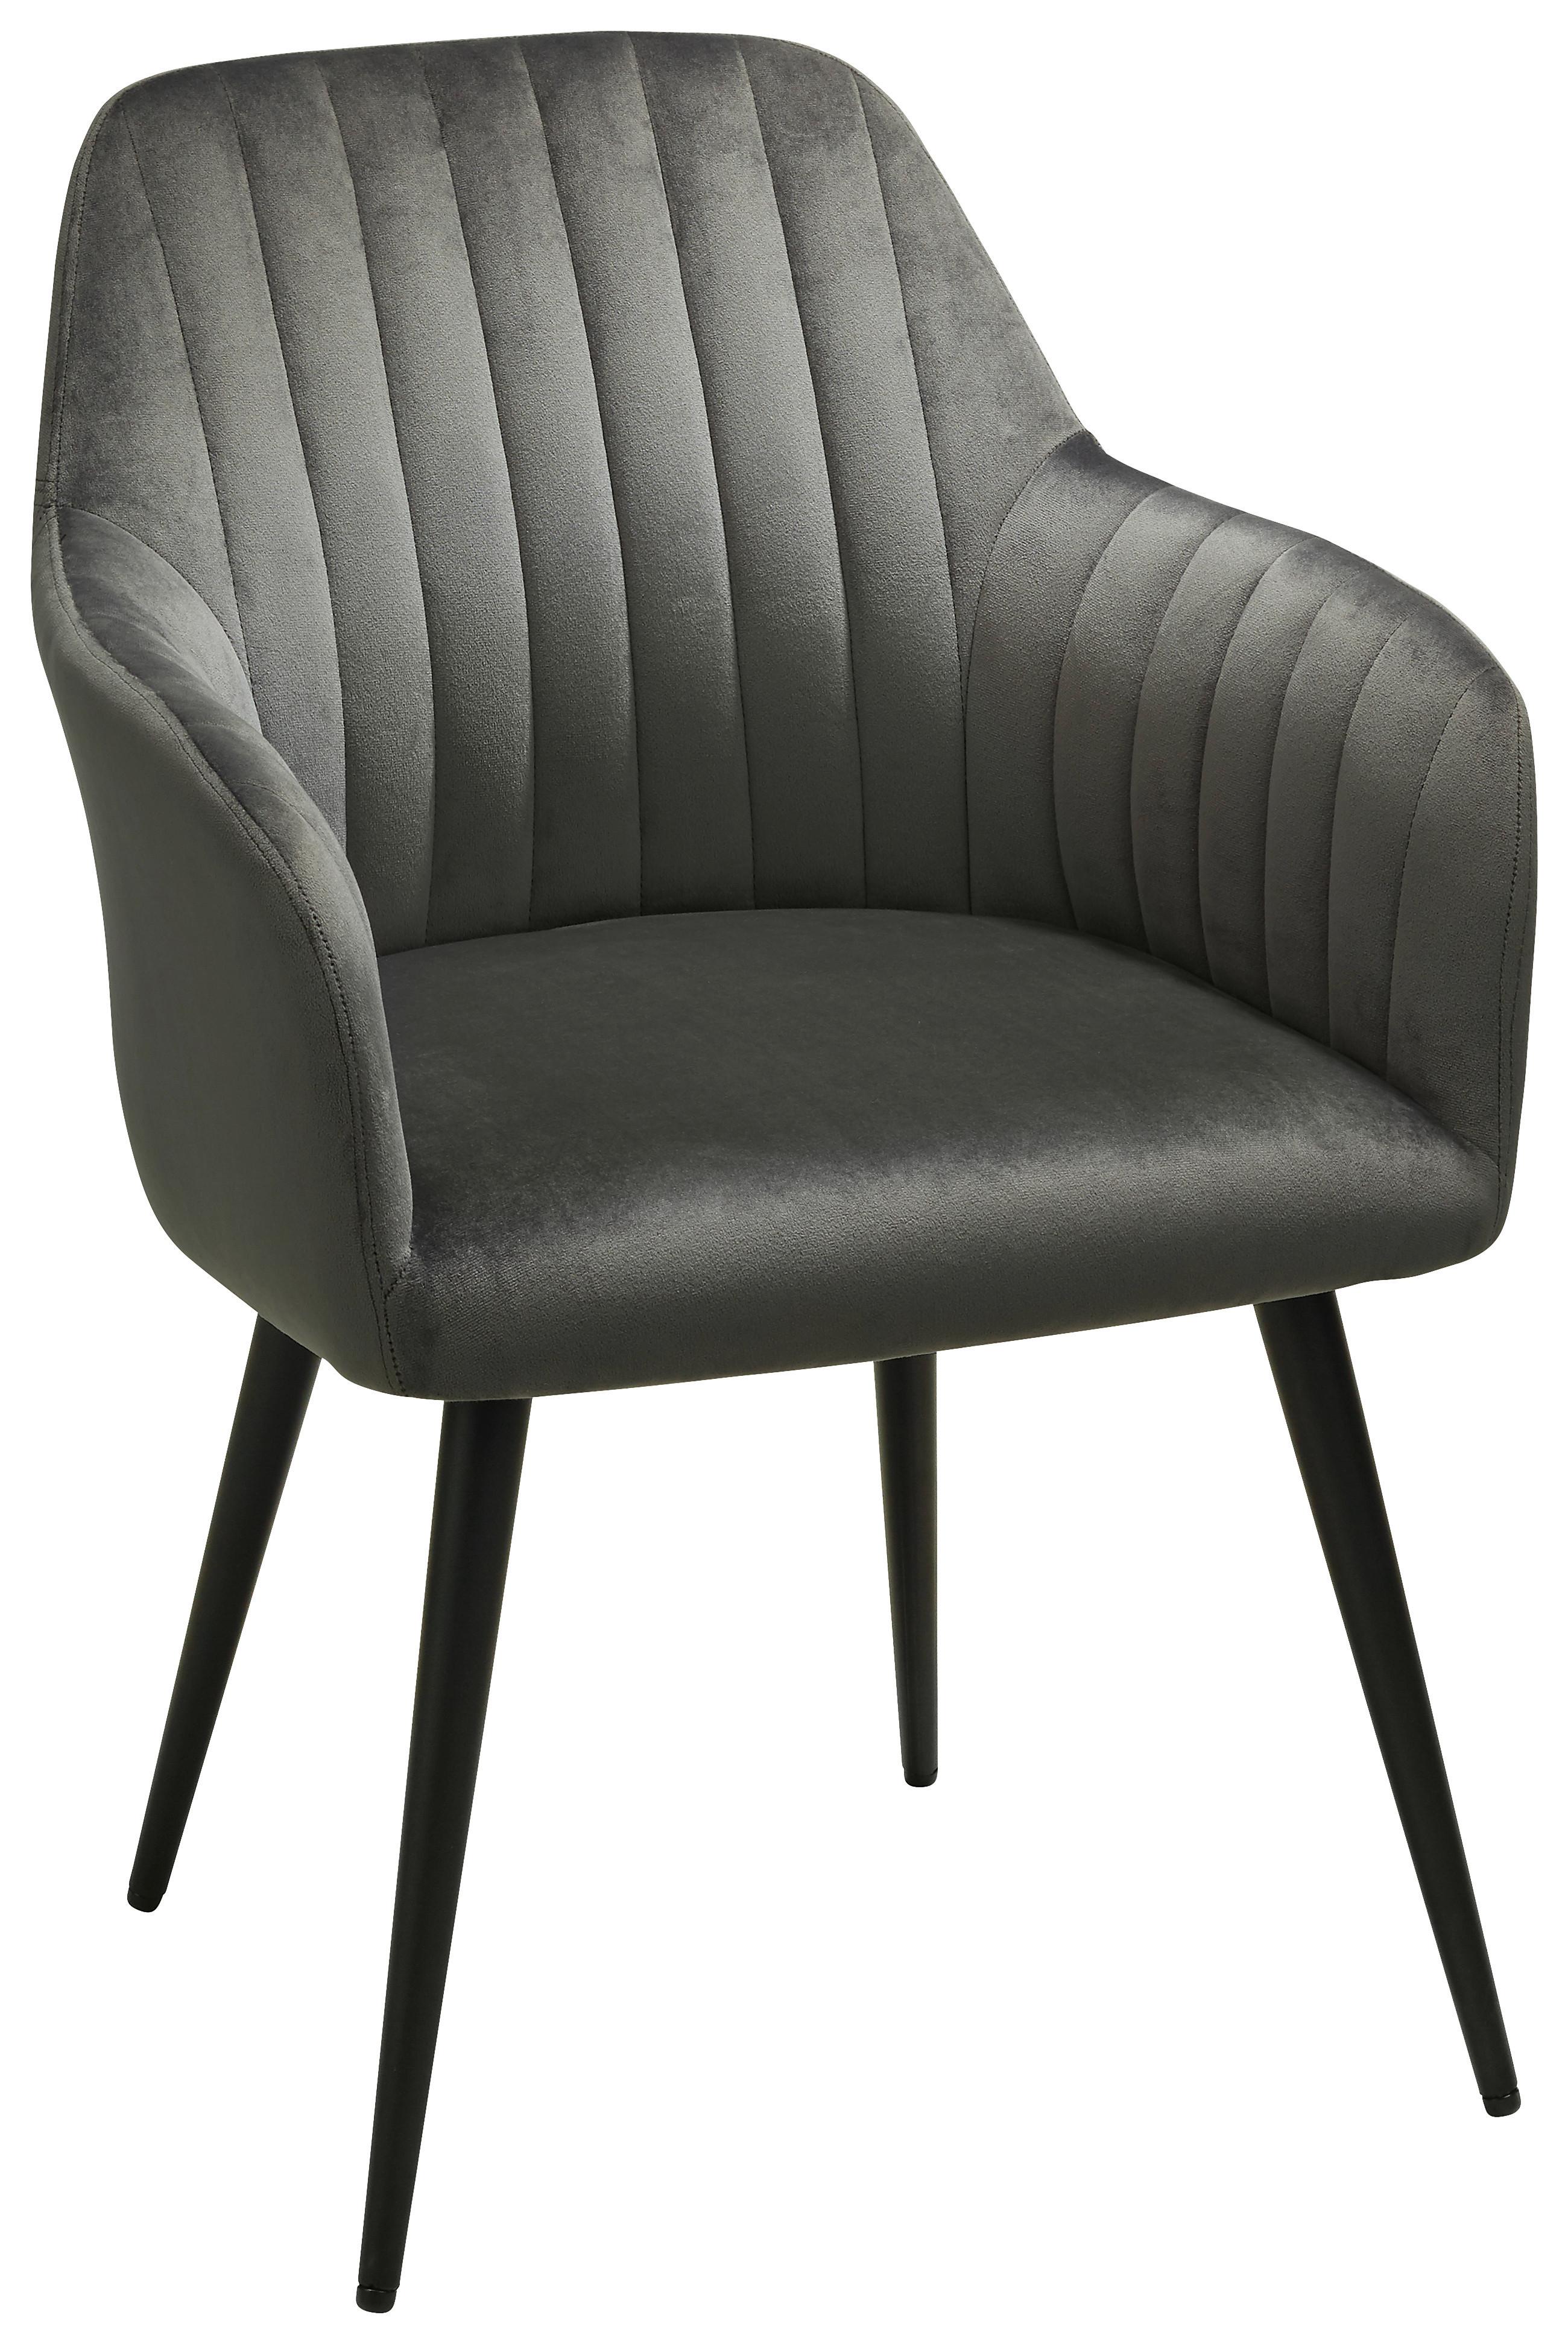 krzesło MARTHA -TOP- - czarny/szary, Modern, metal/tkanina (57/83,5/58cm) - Modern Living